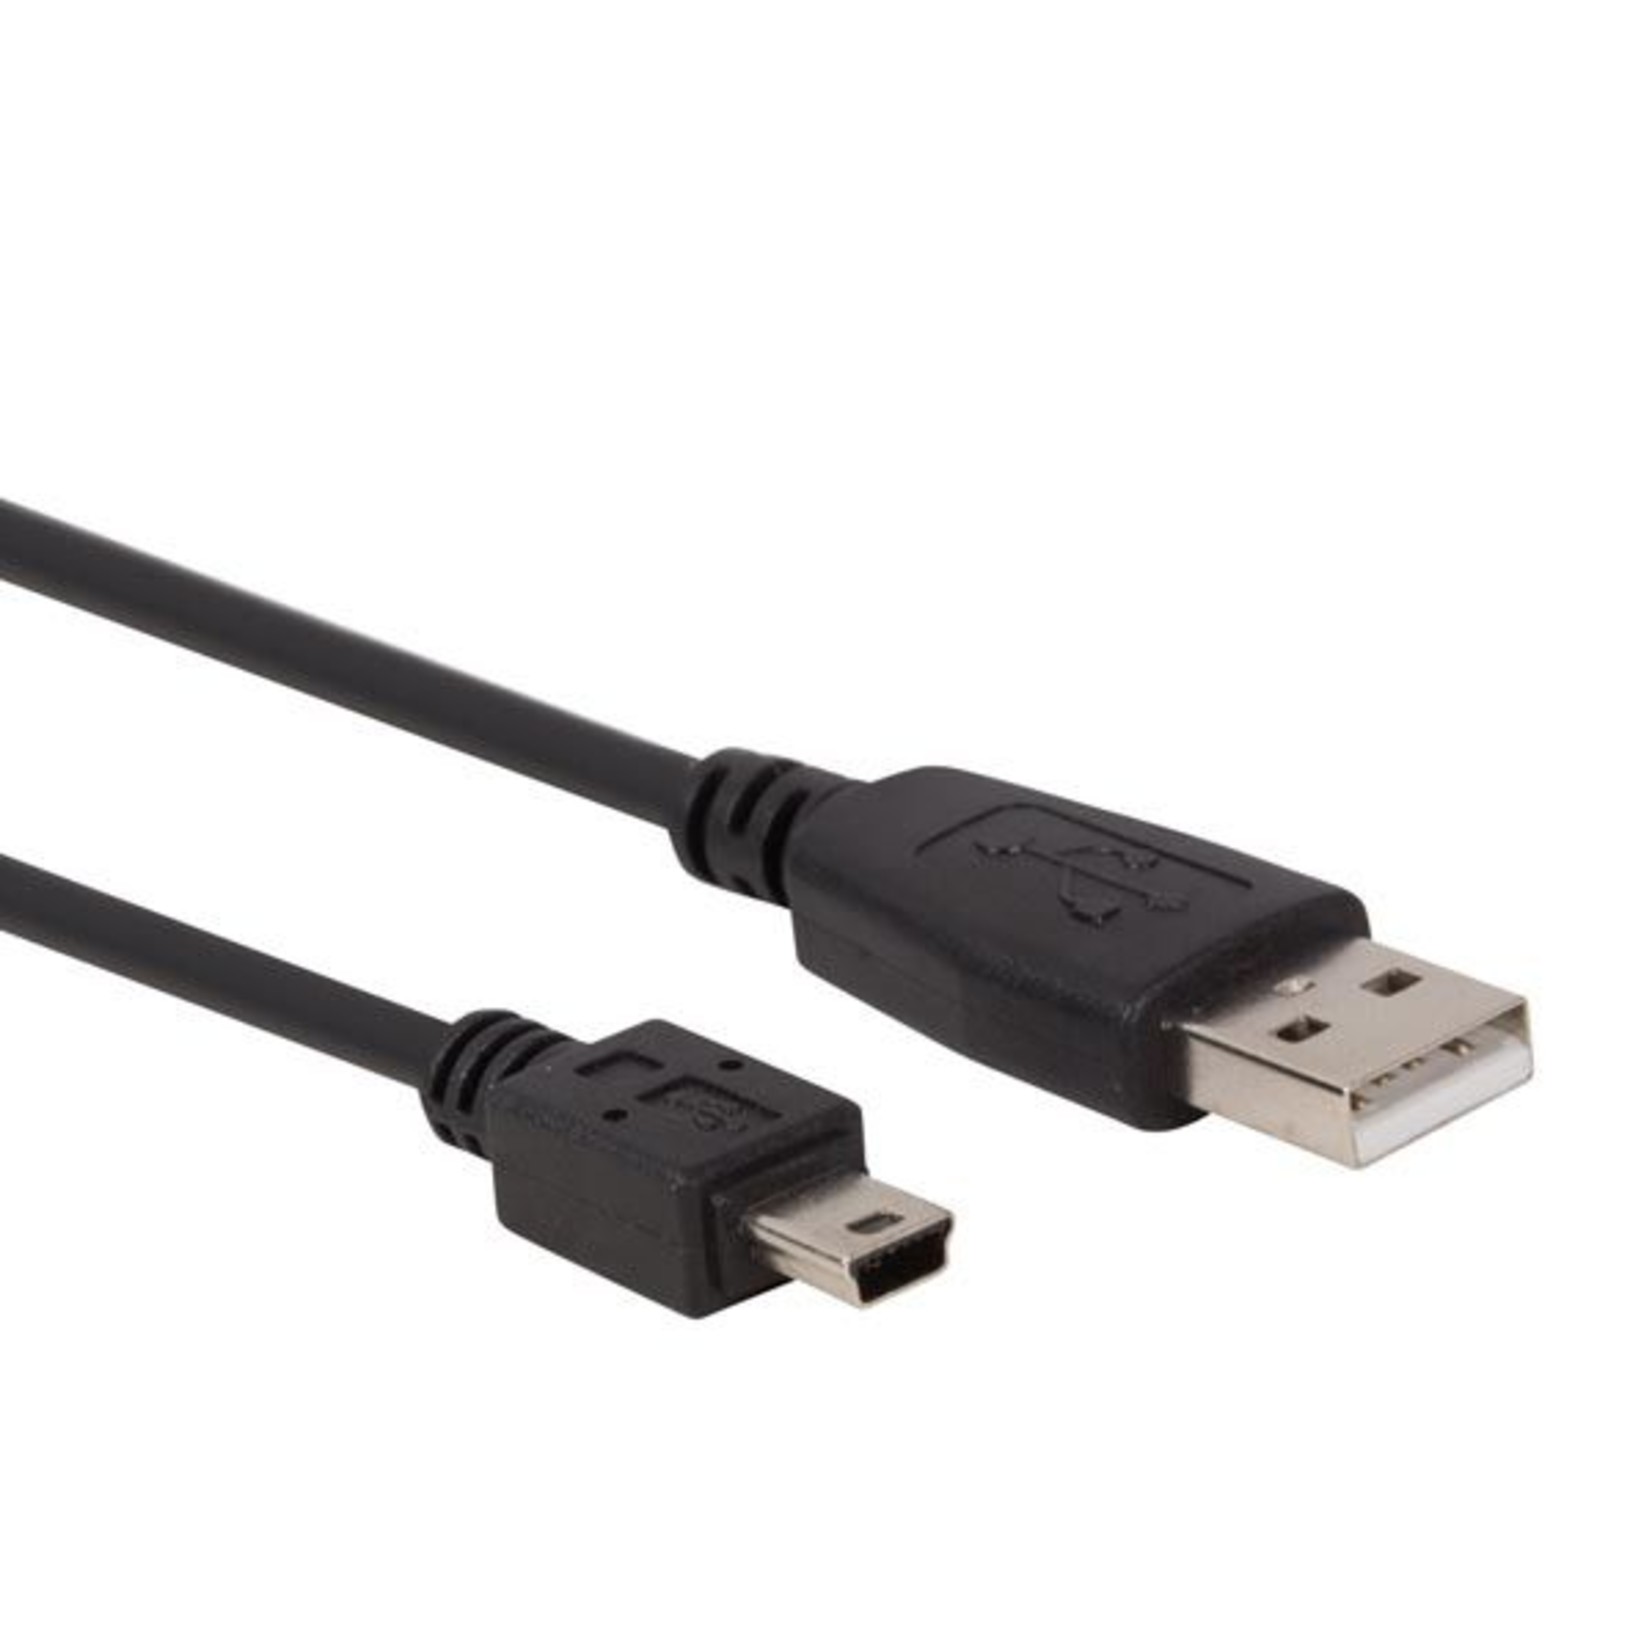 Motel Waterig Vulkaan USB kabel voor LE Mindstorms EV3 brick - RATO Education